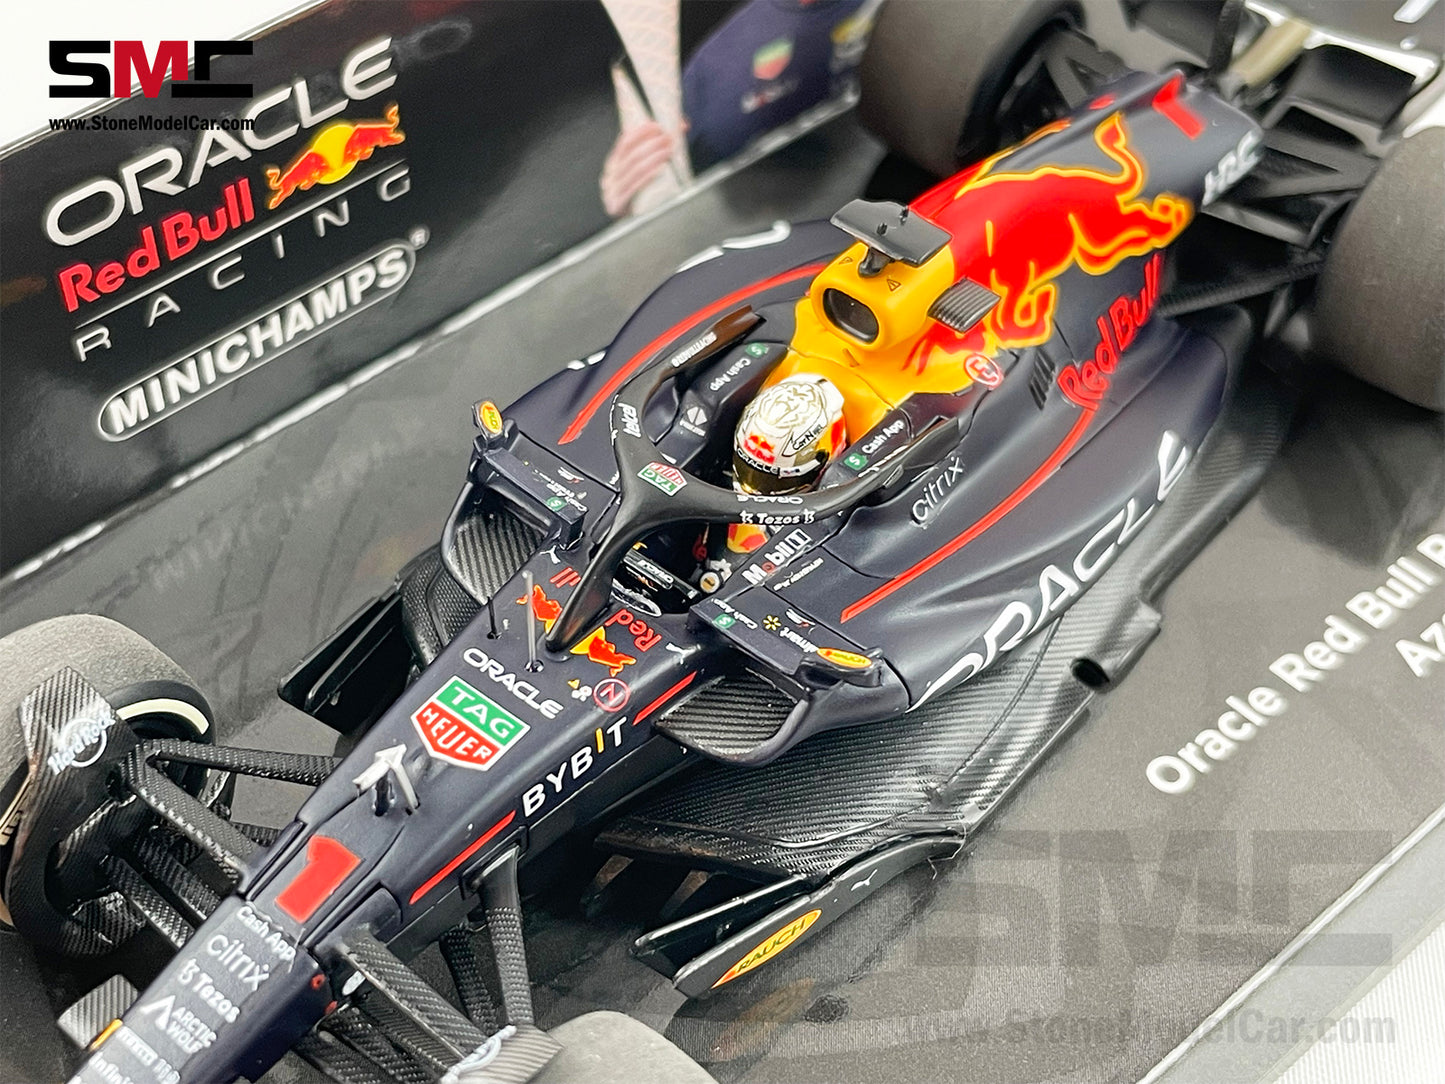 Red Bull F1 RB18 1 Max Verstappen Azerbaijan 2022 World Champion 1:43 MINICHAMPS